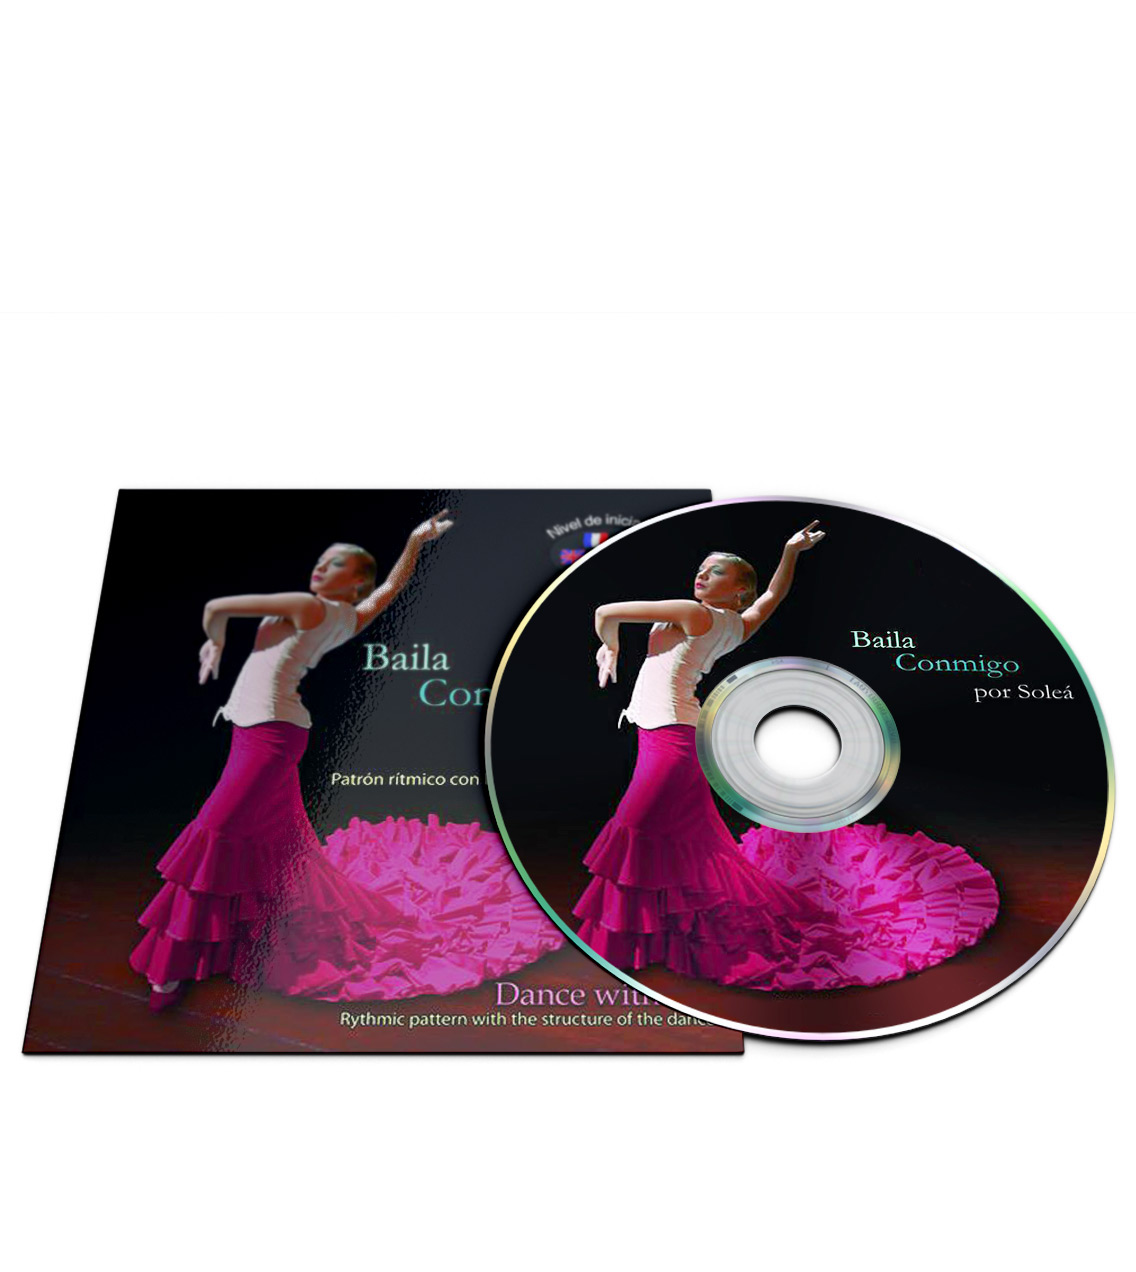  CD de baile flamenco por Soleá